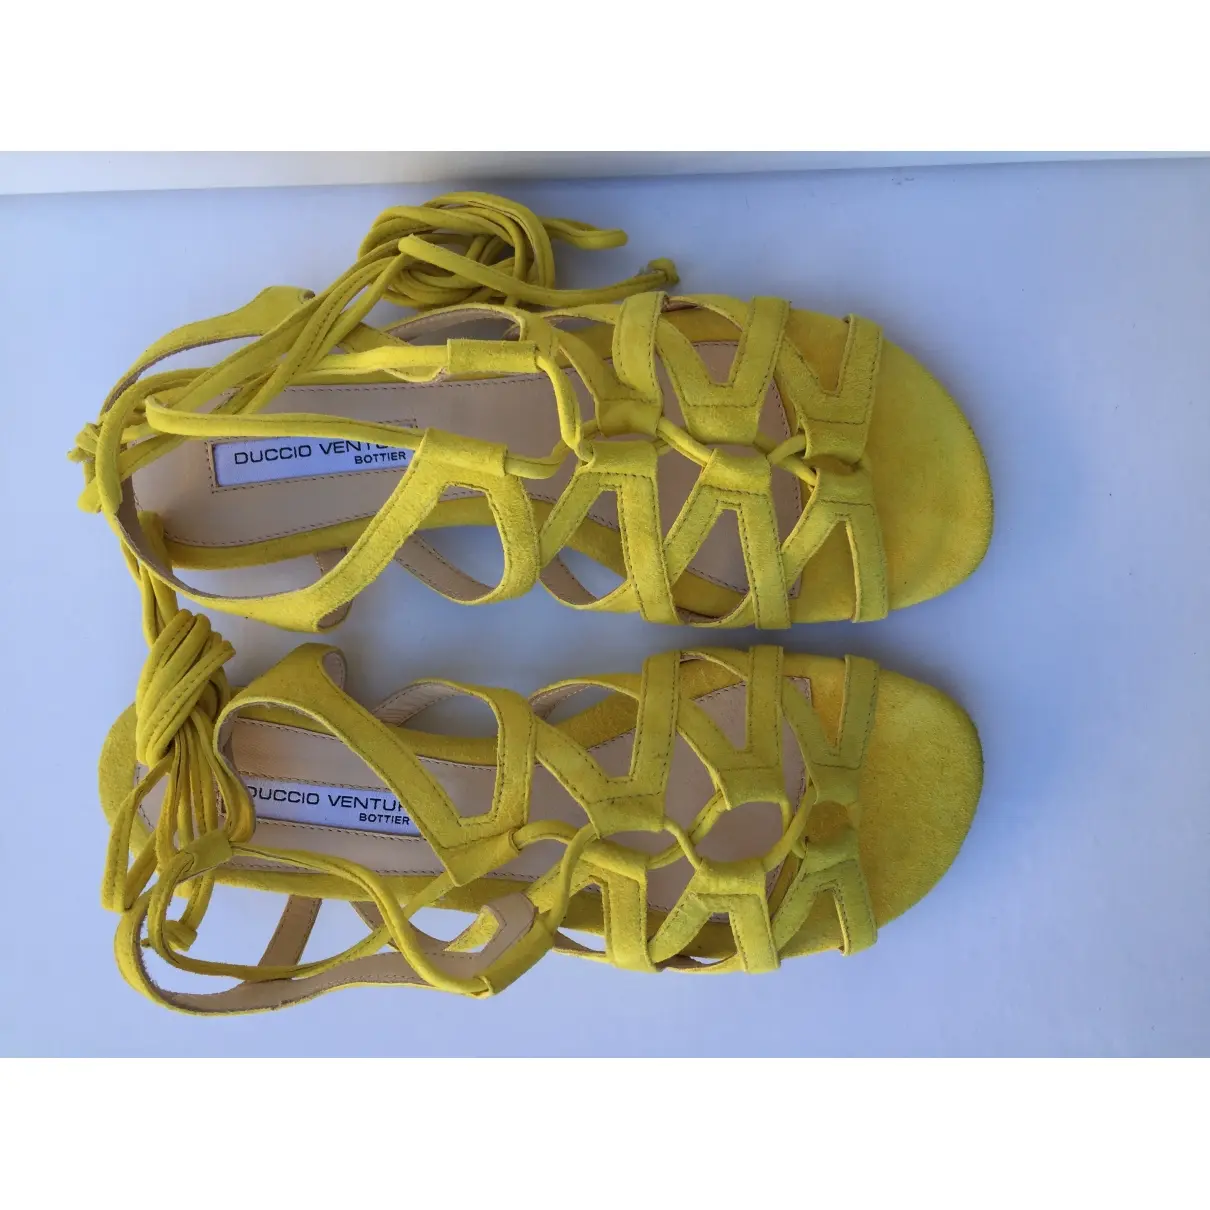 Duccio Venturi Sandal for sale